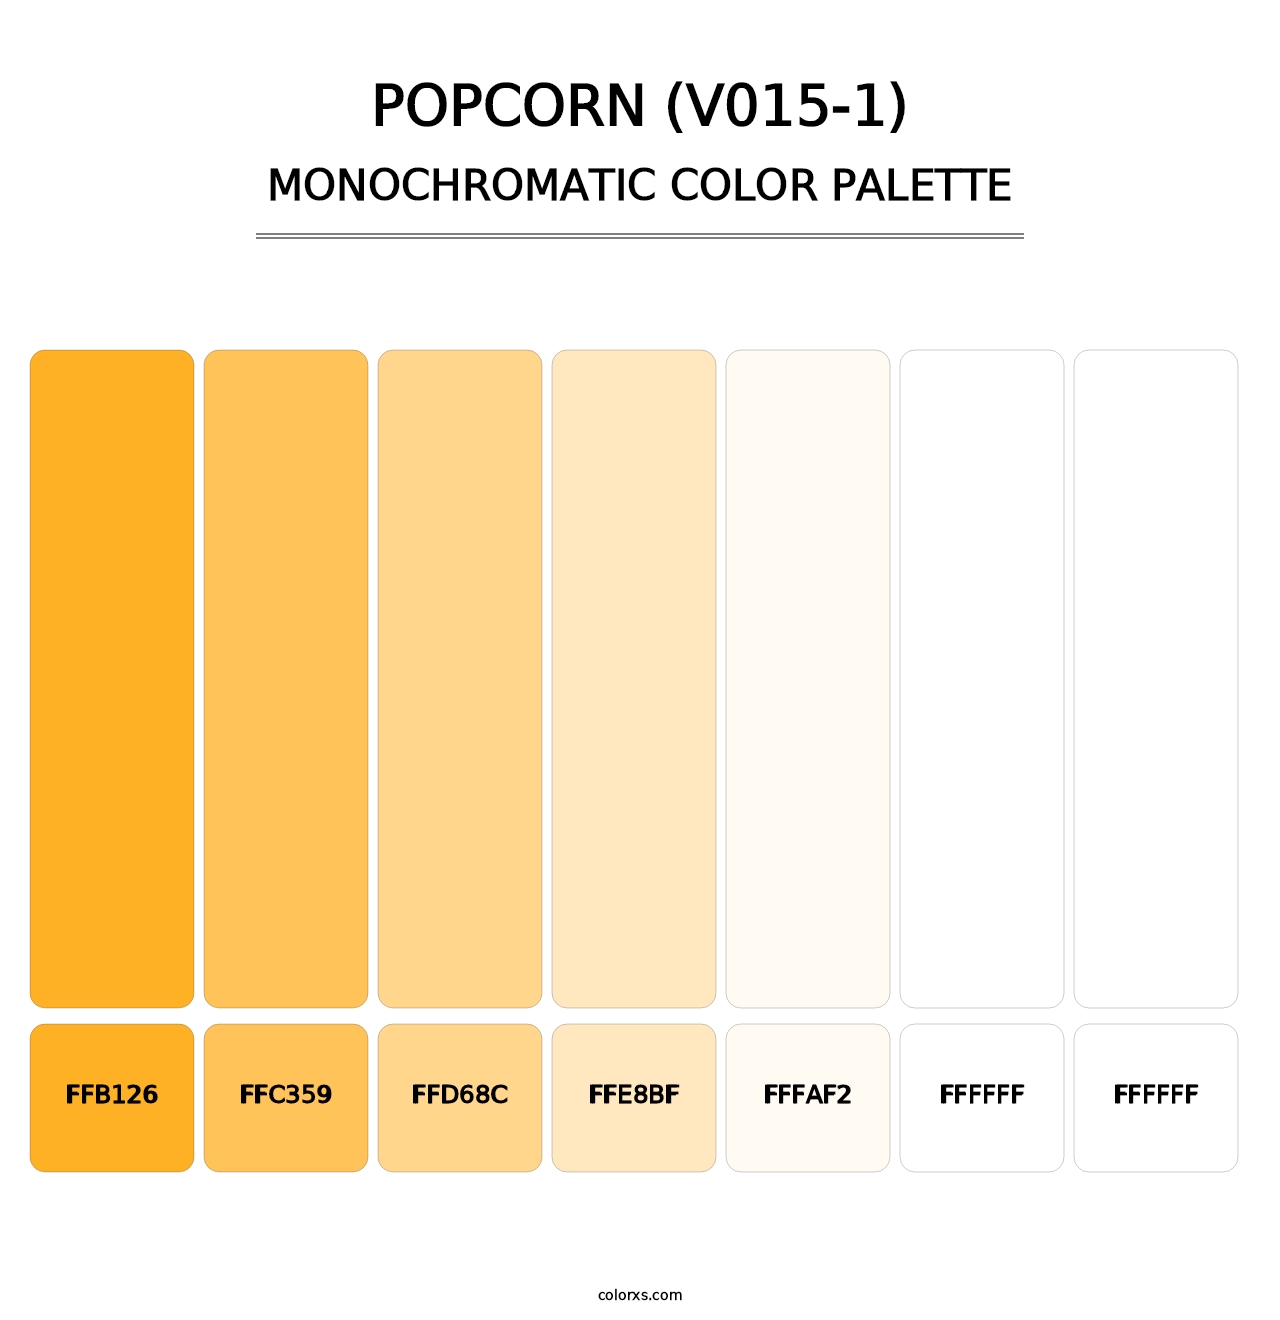 Popcorn (V015-1) - Monochromatic Color Palette